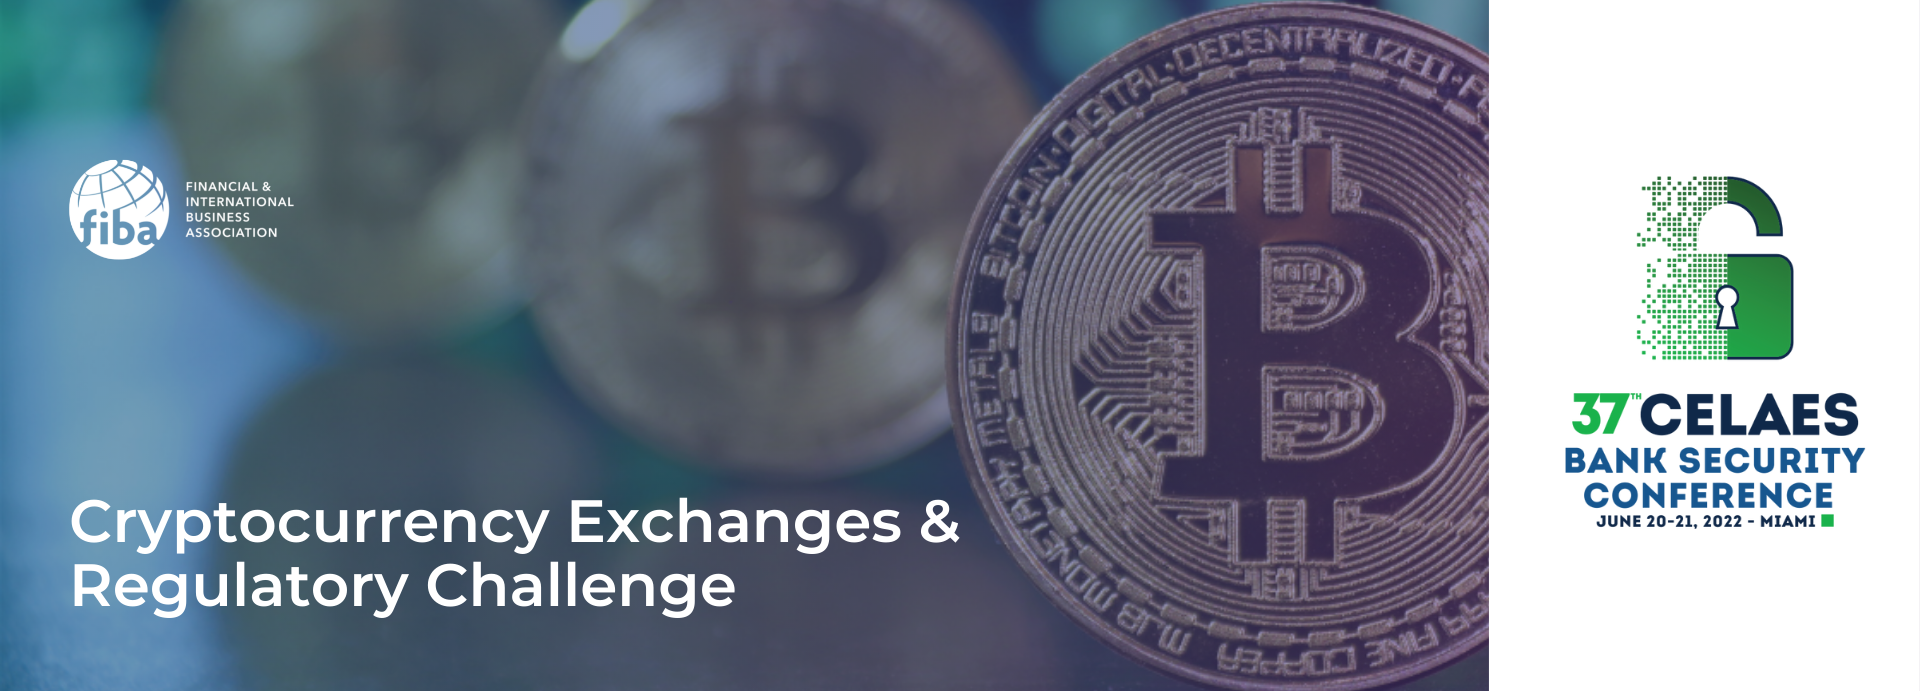 Cryptocurrency Exchanges & Regulatory Challenge